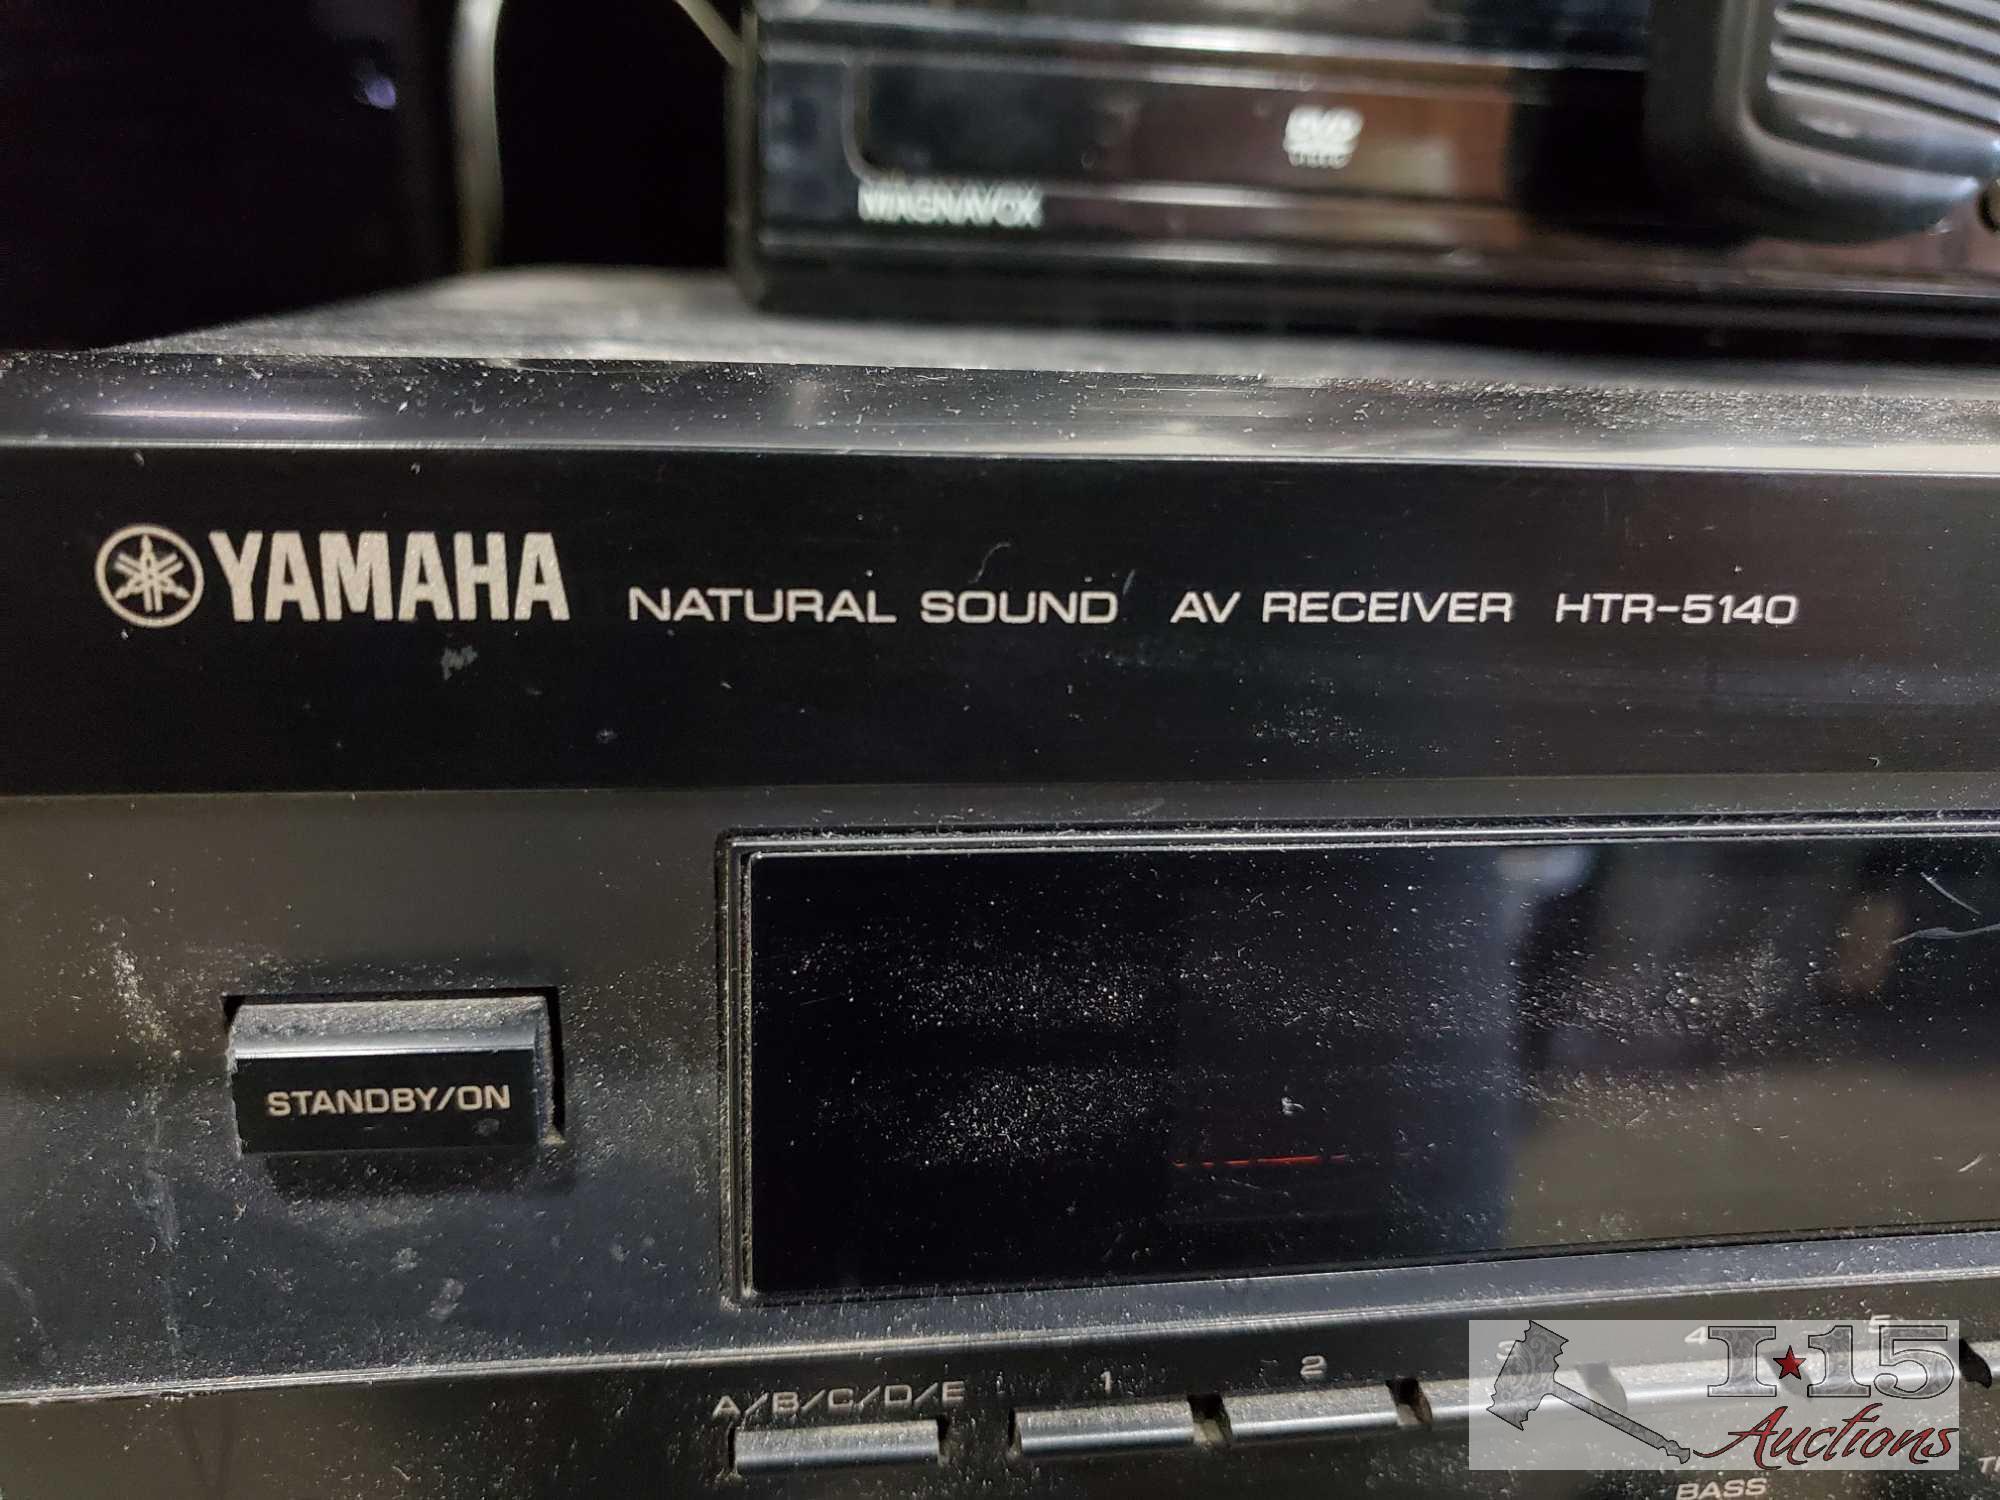 Yamaha AV Reciever, Magnavox DVD Player, Pioneer Karaoke Mixer and Radioshack CB Radio